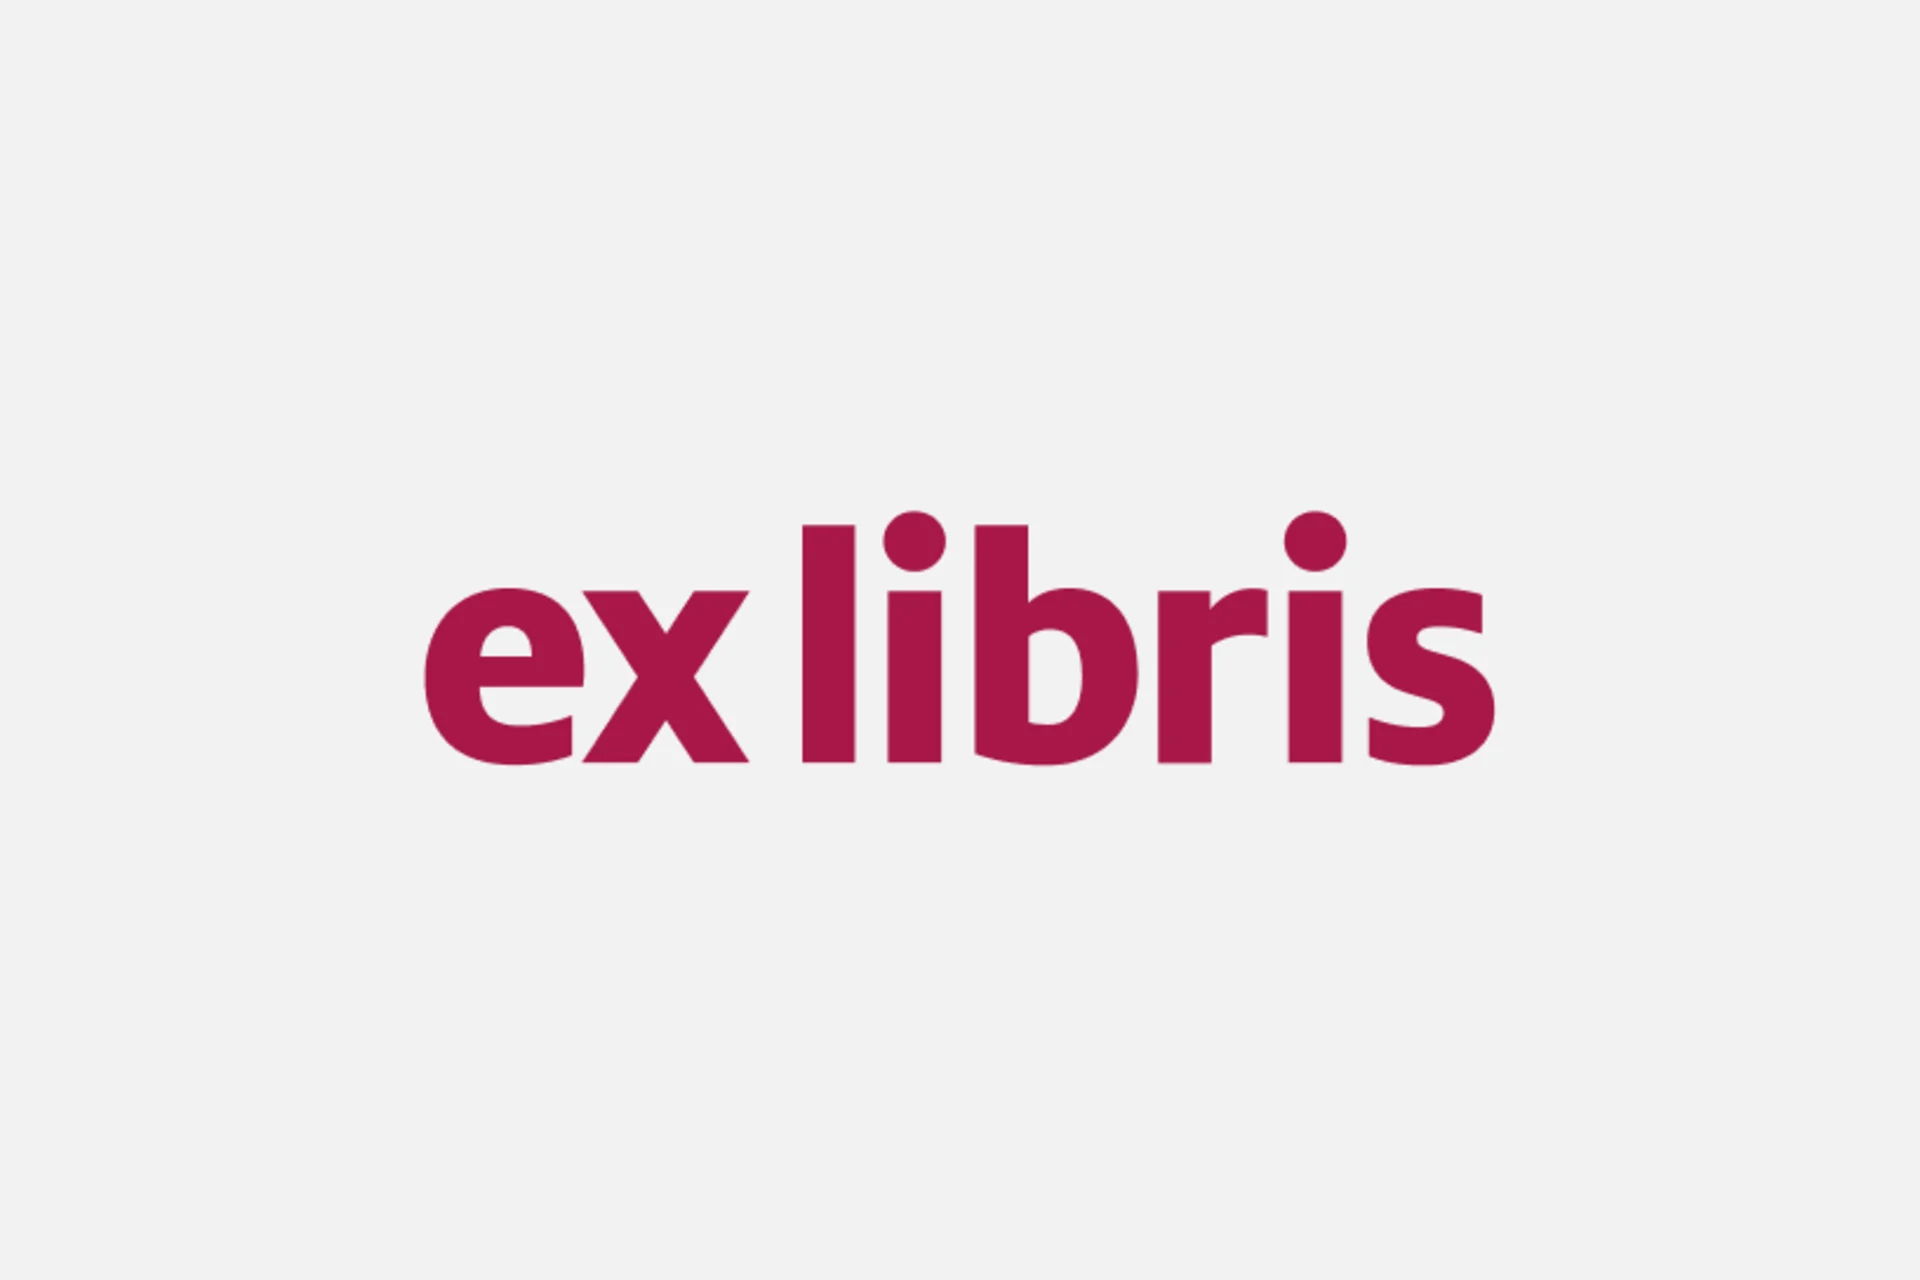 Ex libris logo